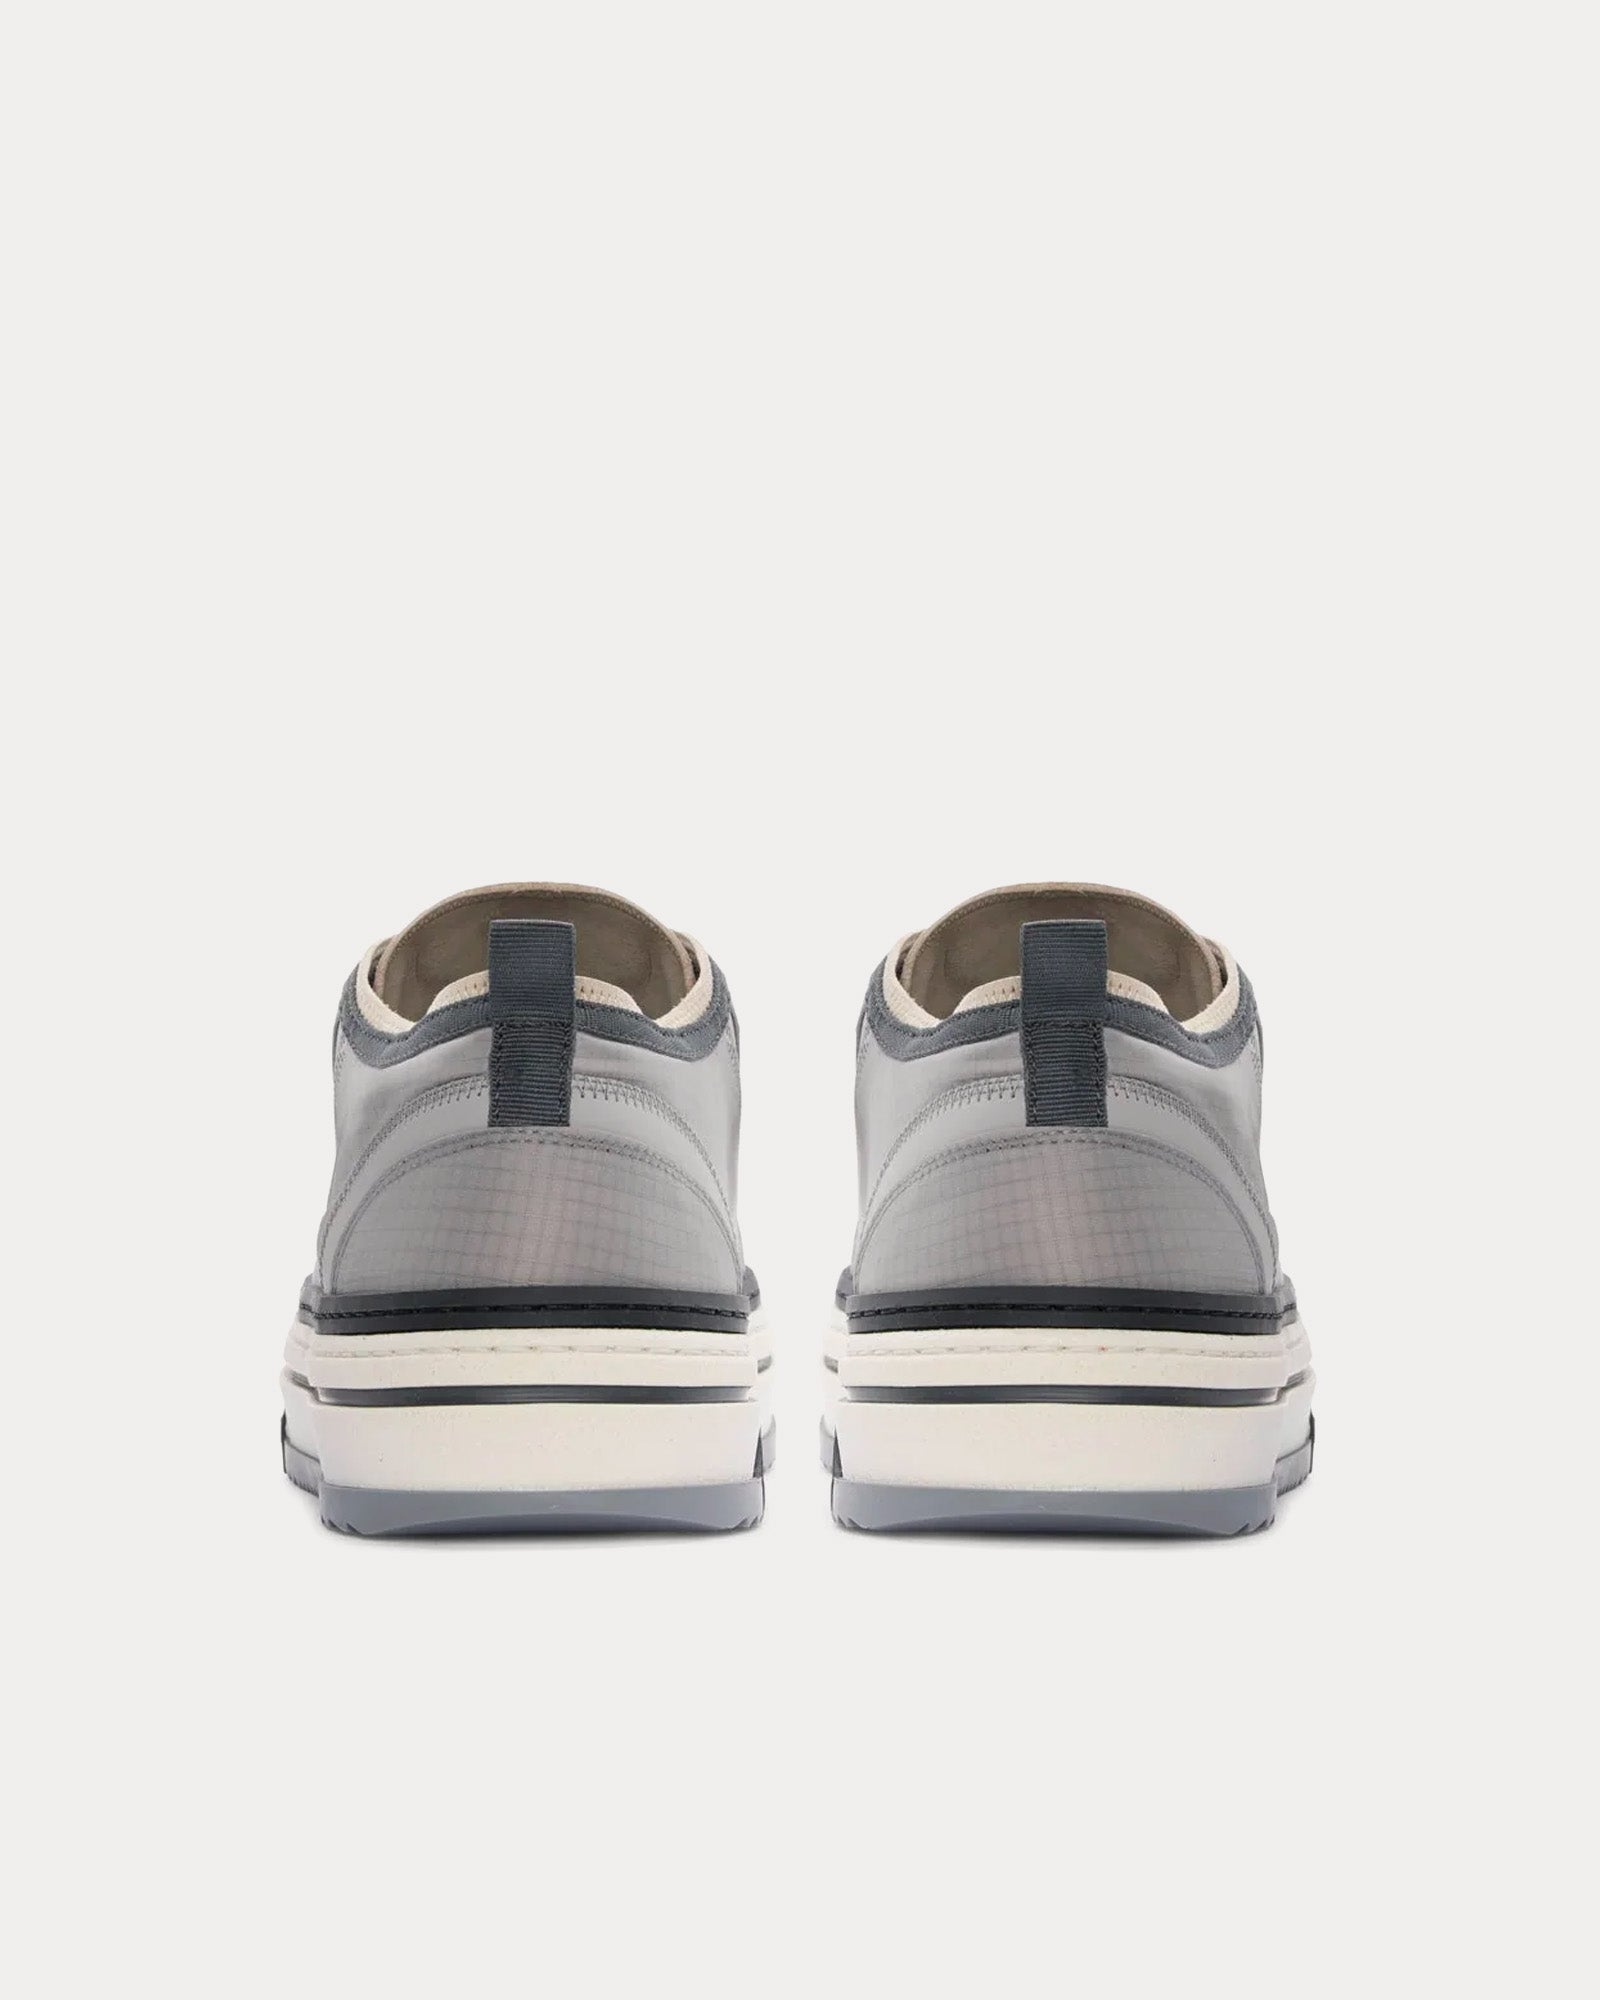 Represent - HTN X Low Grey Low Top Sneakers